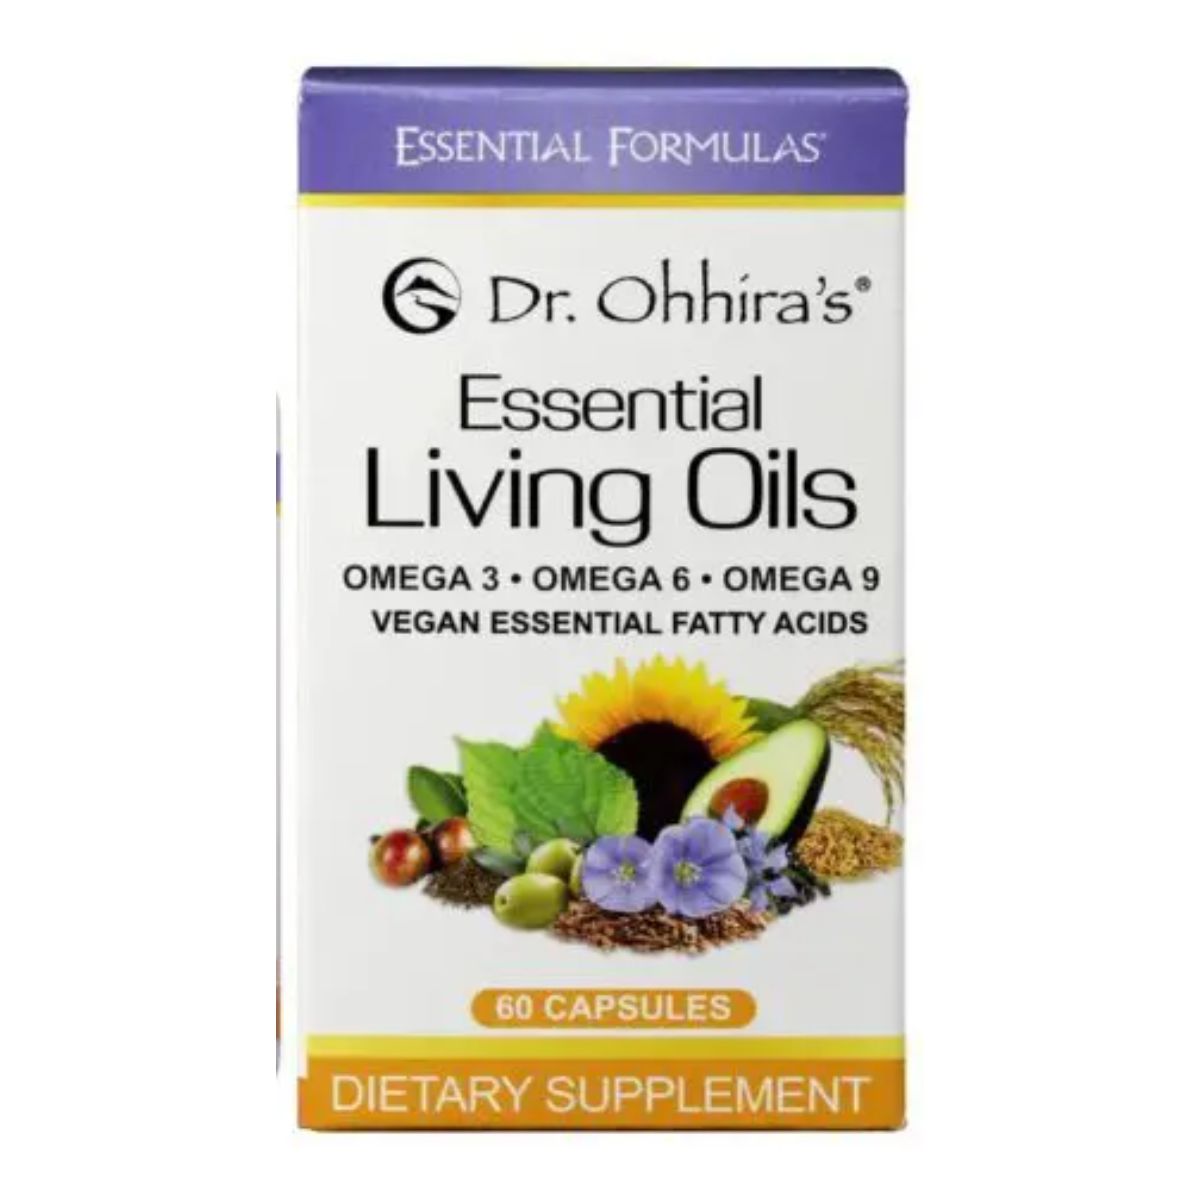 Omega, Dr. Ohhira’s Essential Living Oils